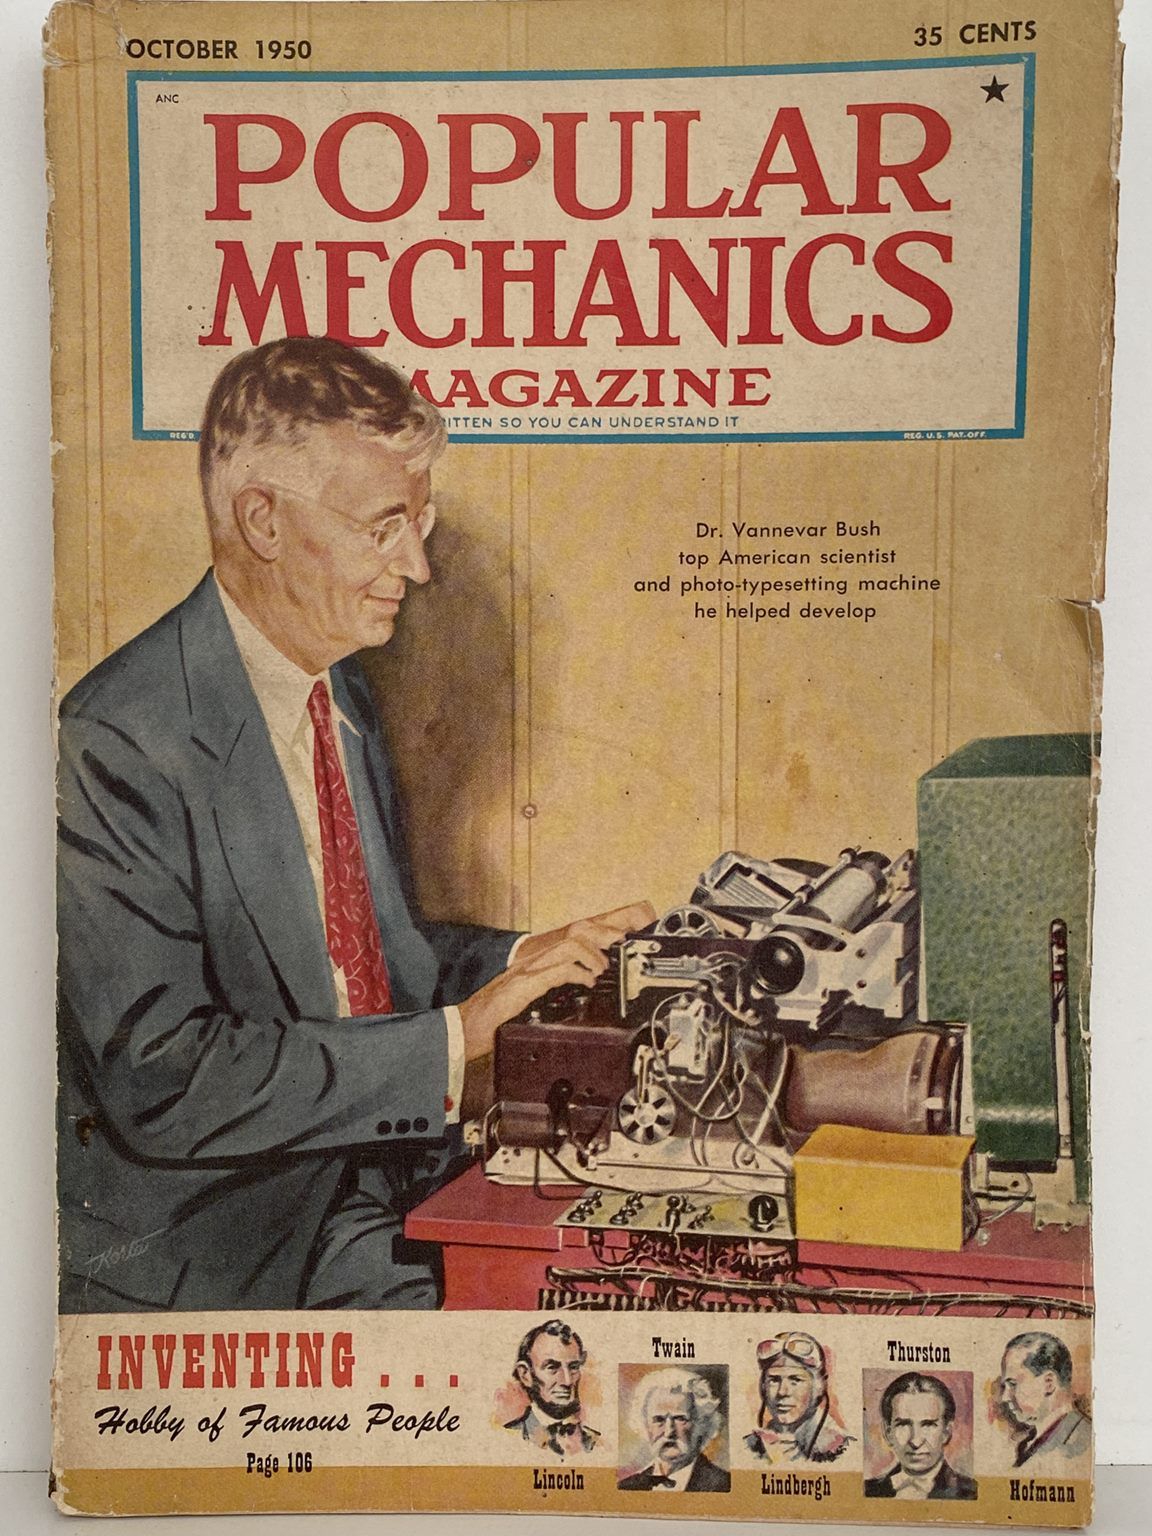 VINTAGE MAGAZINE: Popular Mechanics - Vol. 94, No. 4 - October 1950